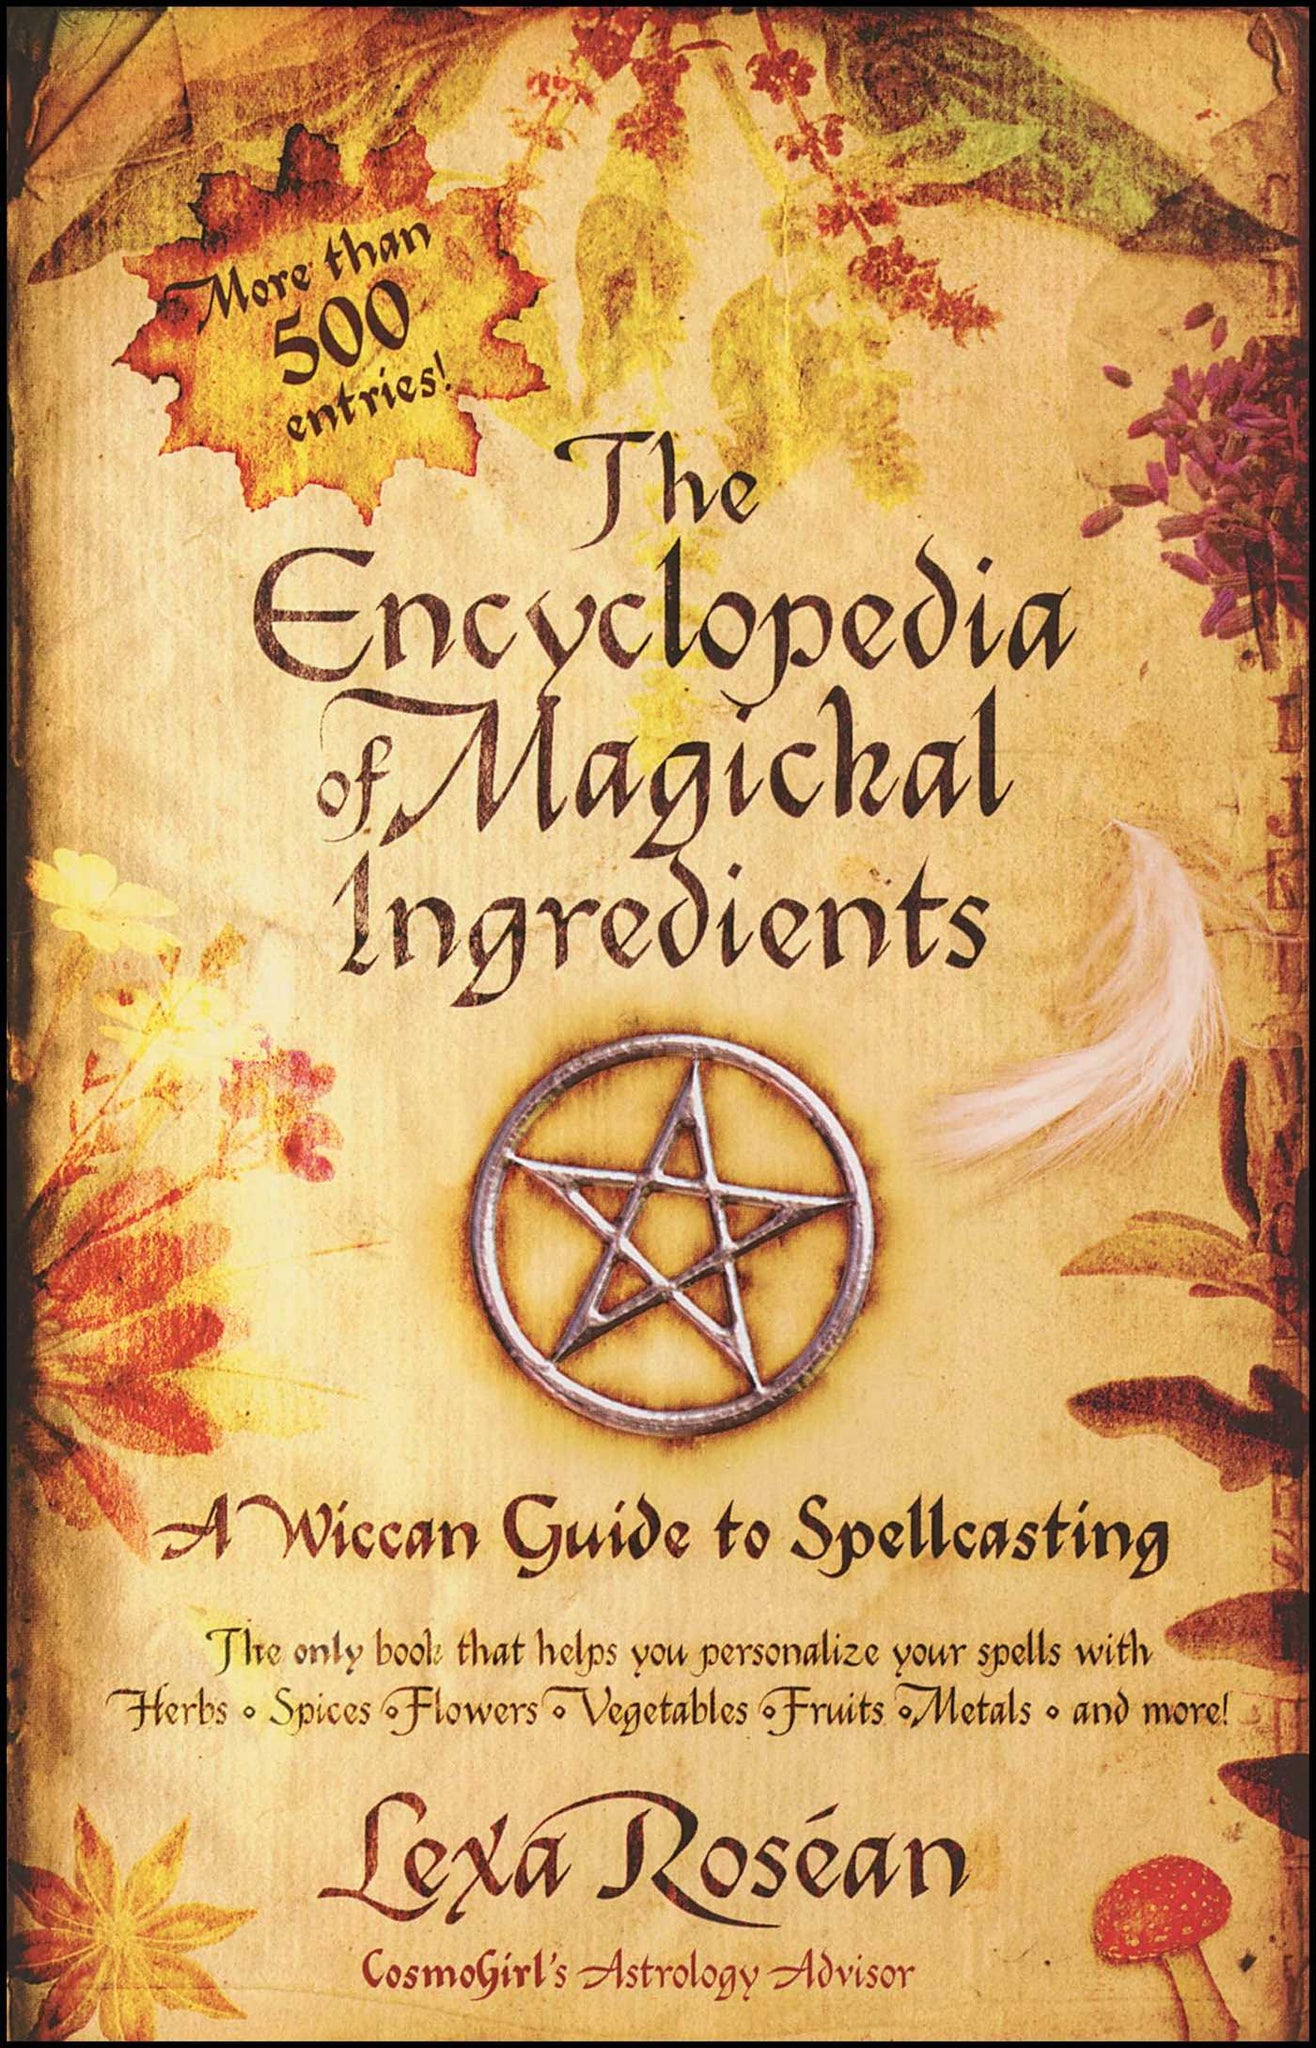 The Encyclopedia of Magickal Ingredients by Lexa Roséan